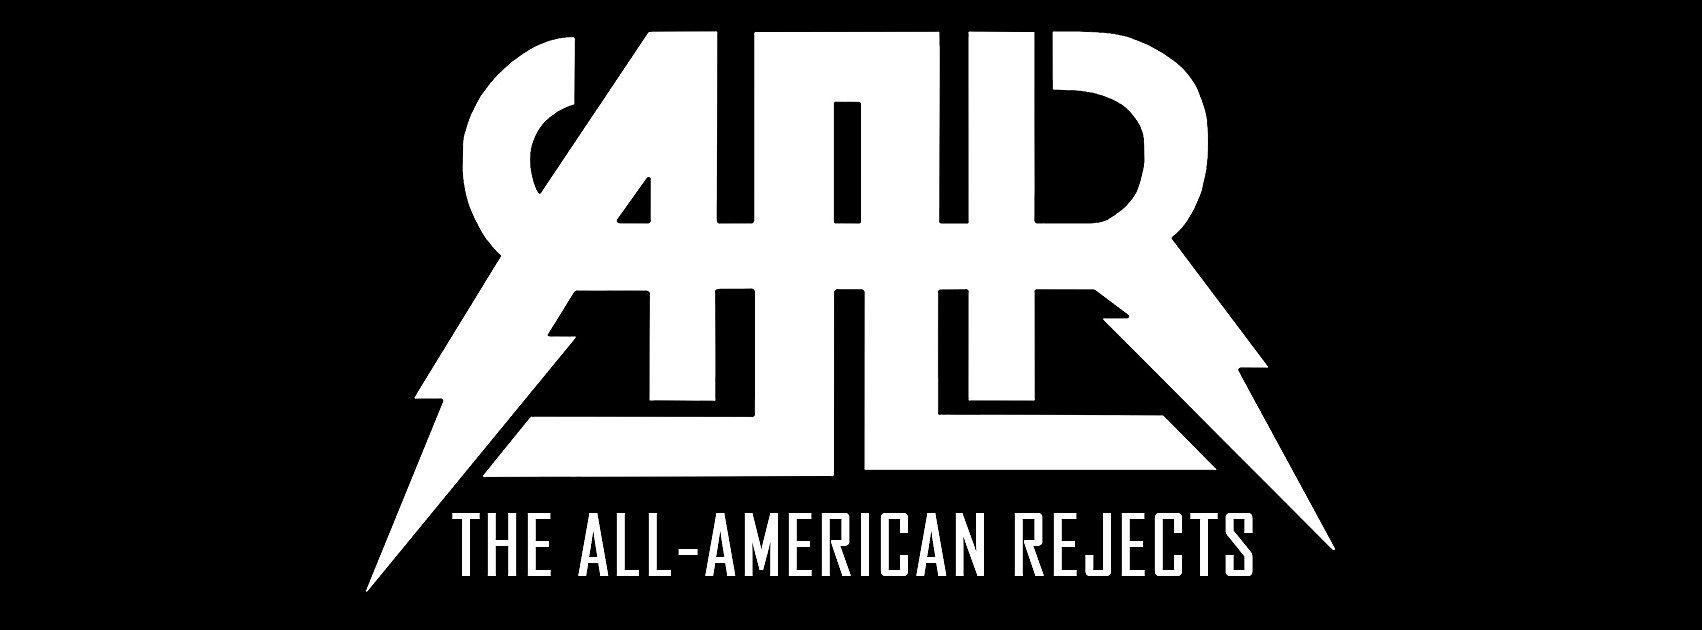 All American Rejects Logo - All-American Rejects Coming To Wartburg